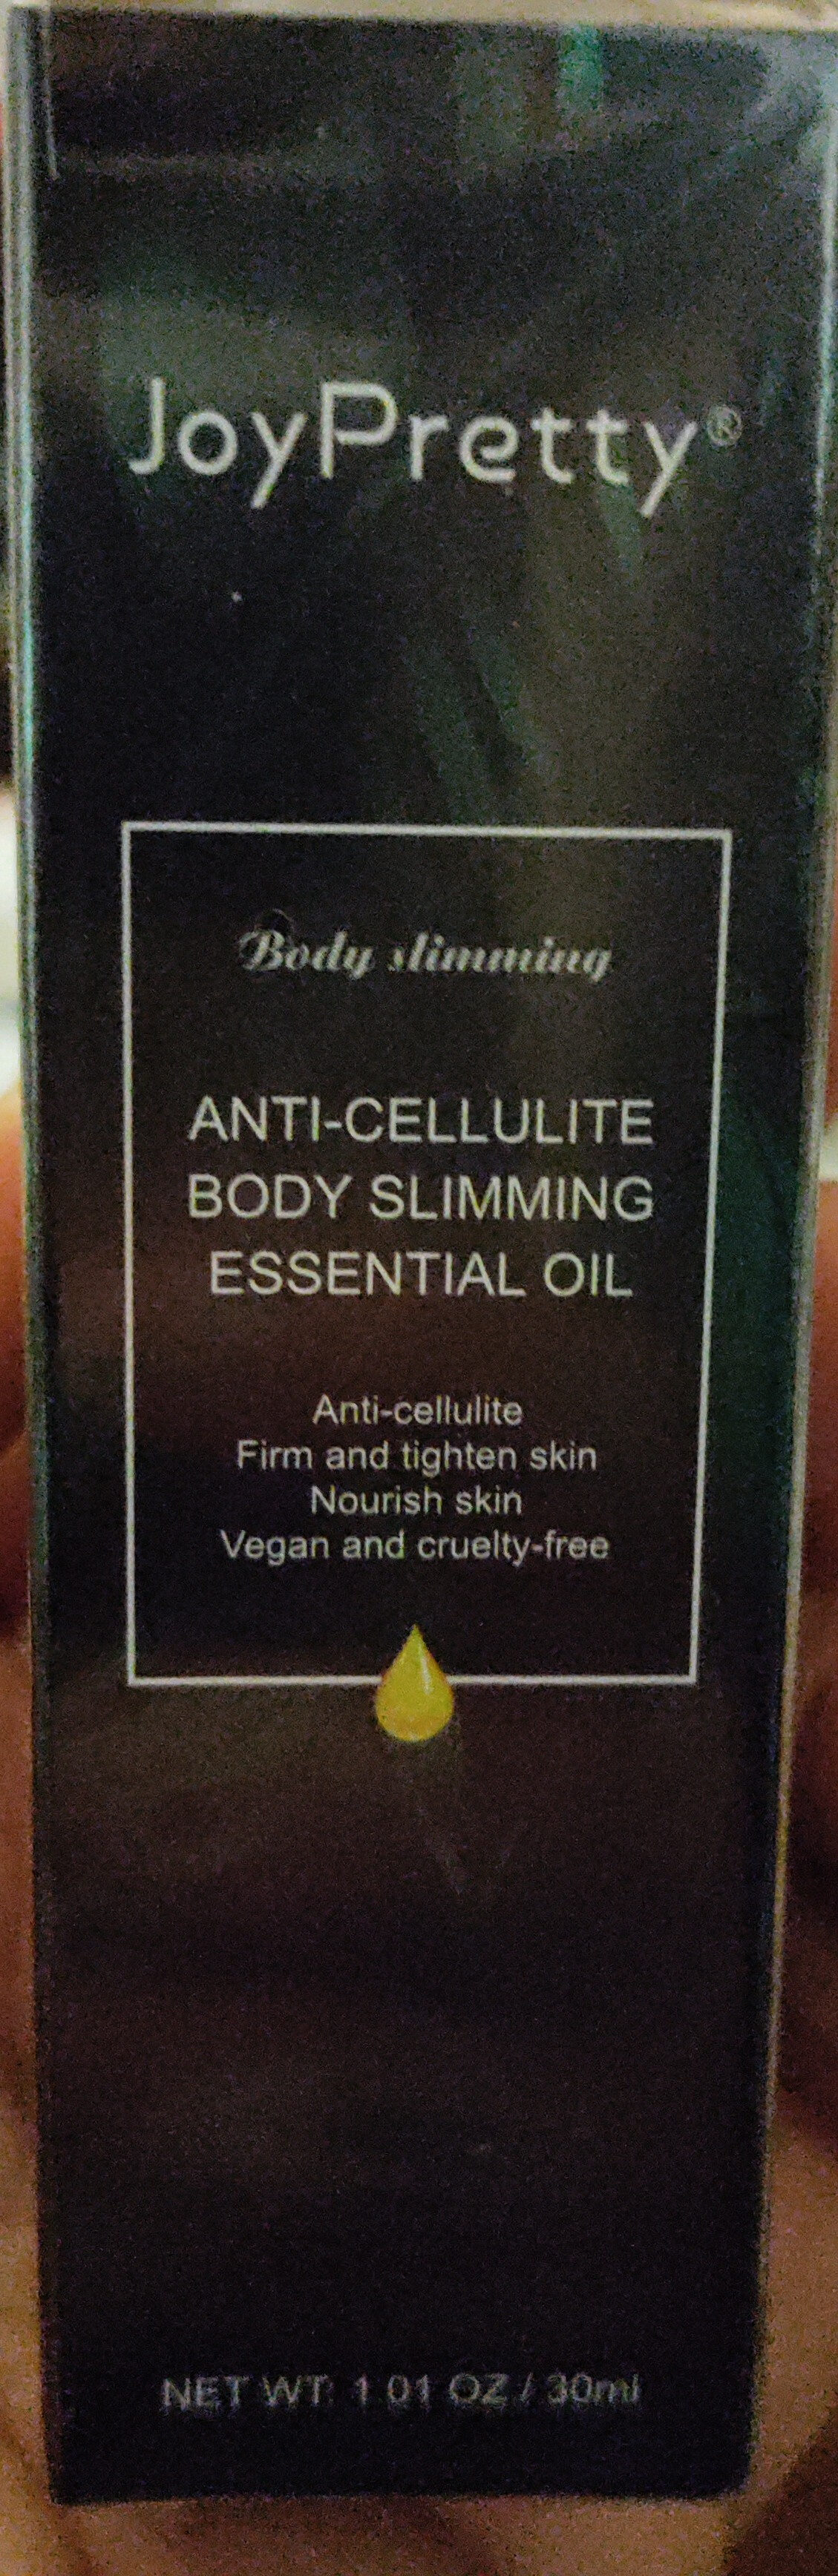 Anti-cellulite Body slimming essential oil - מוצר - fr